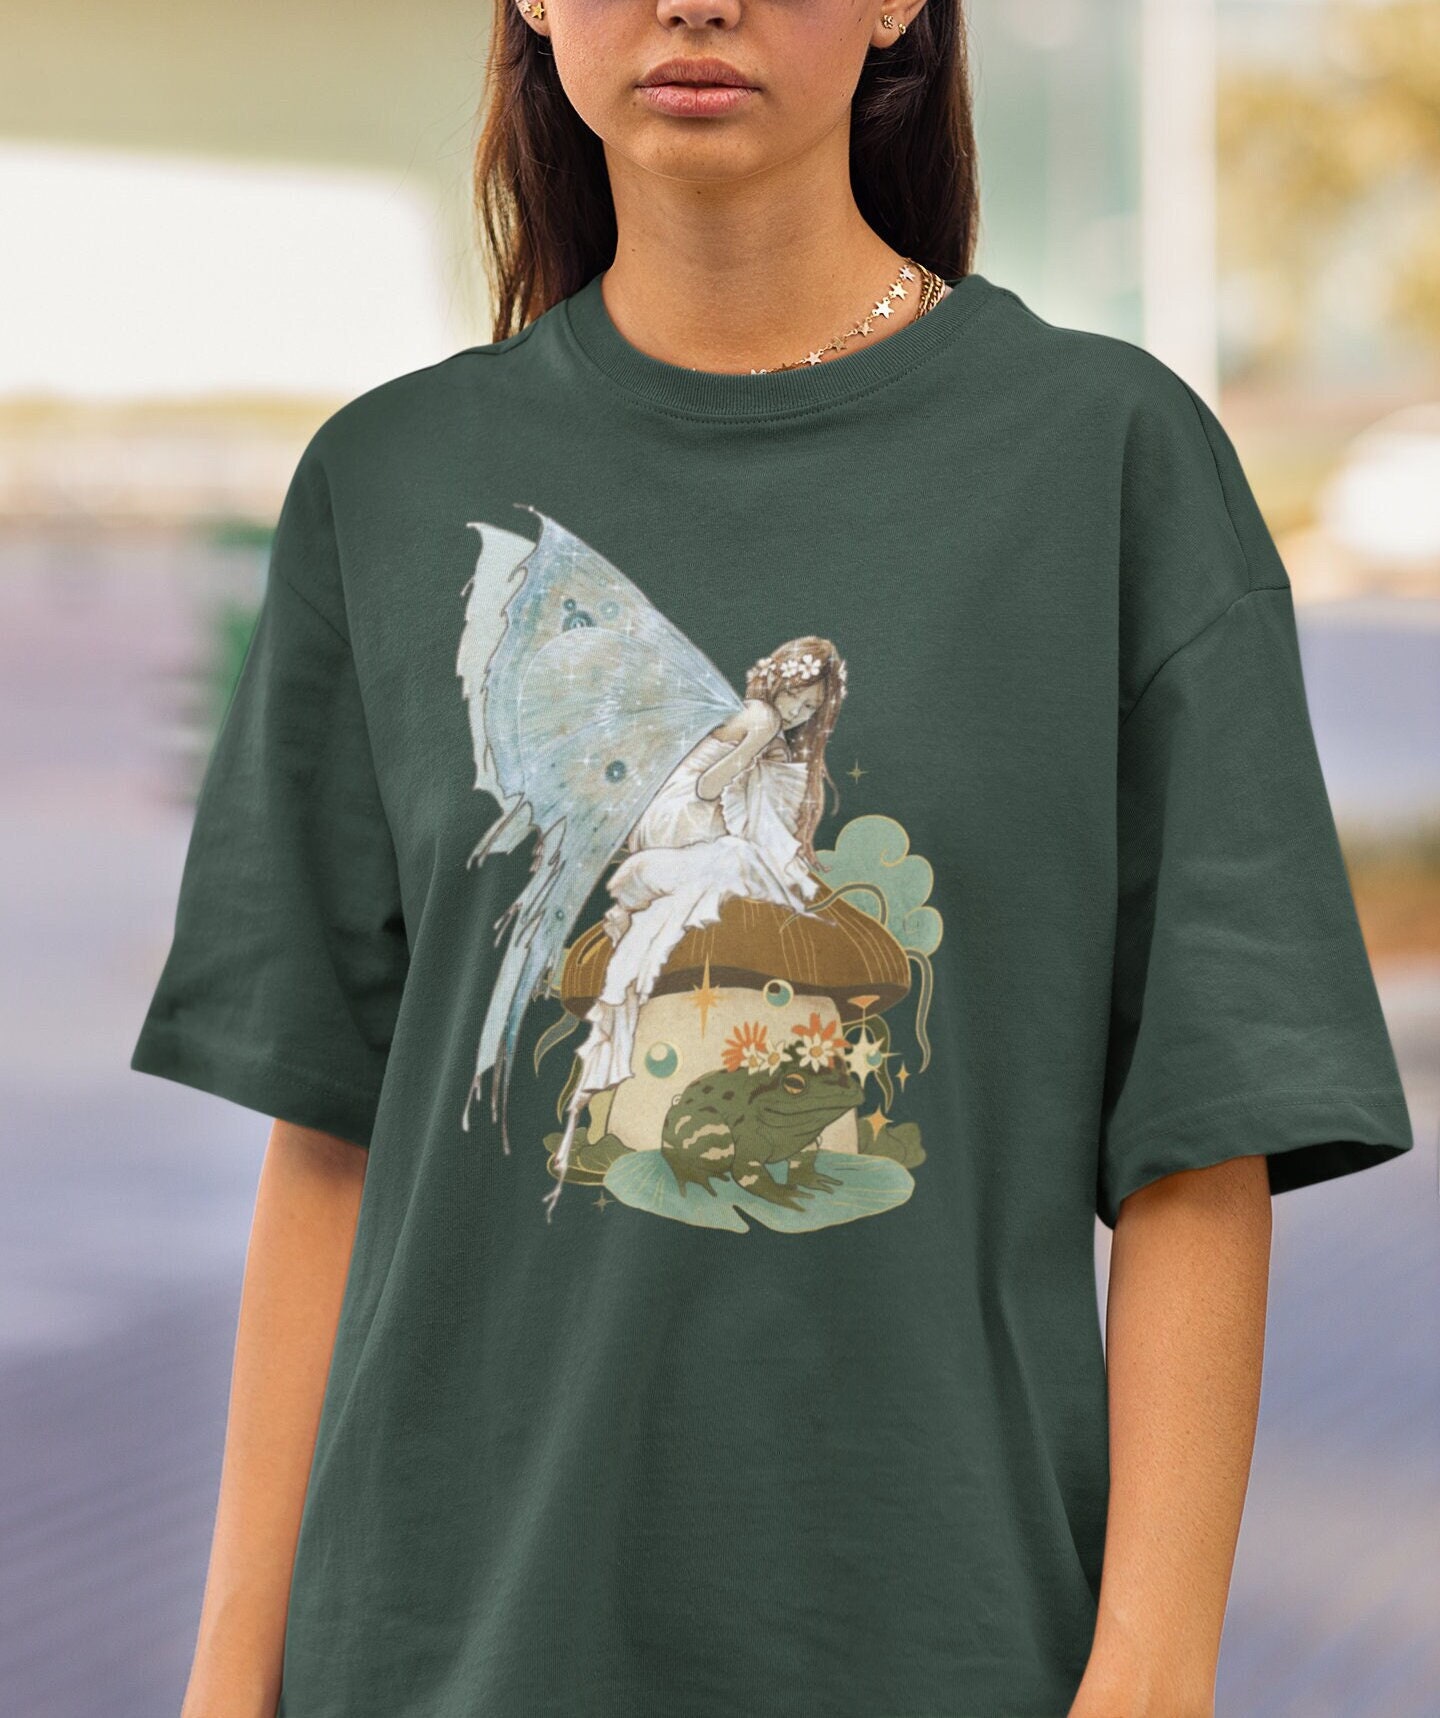 Frog Fairycore Grunge Aesthetic Cottagecore' Women's T-Shirt